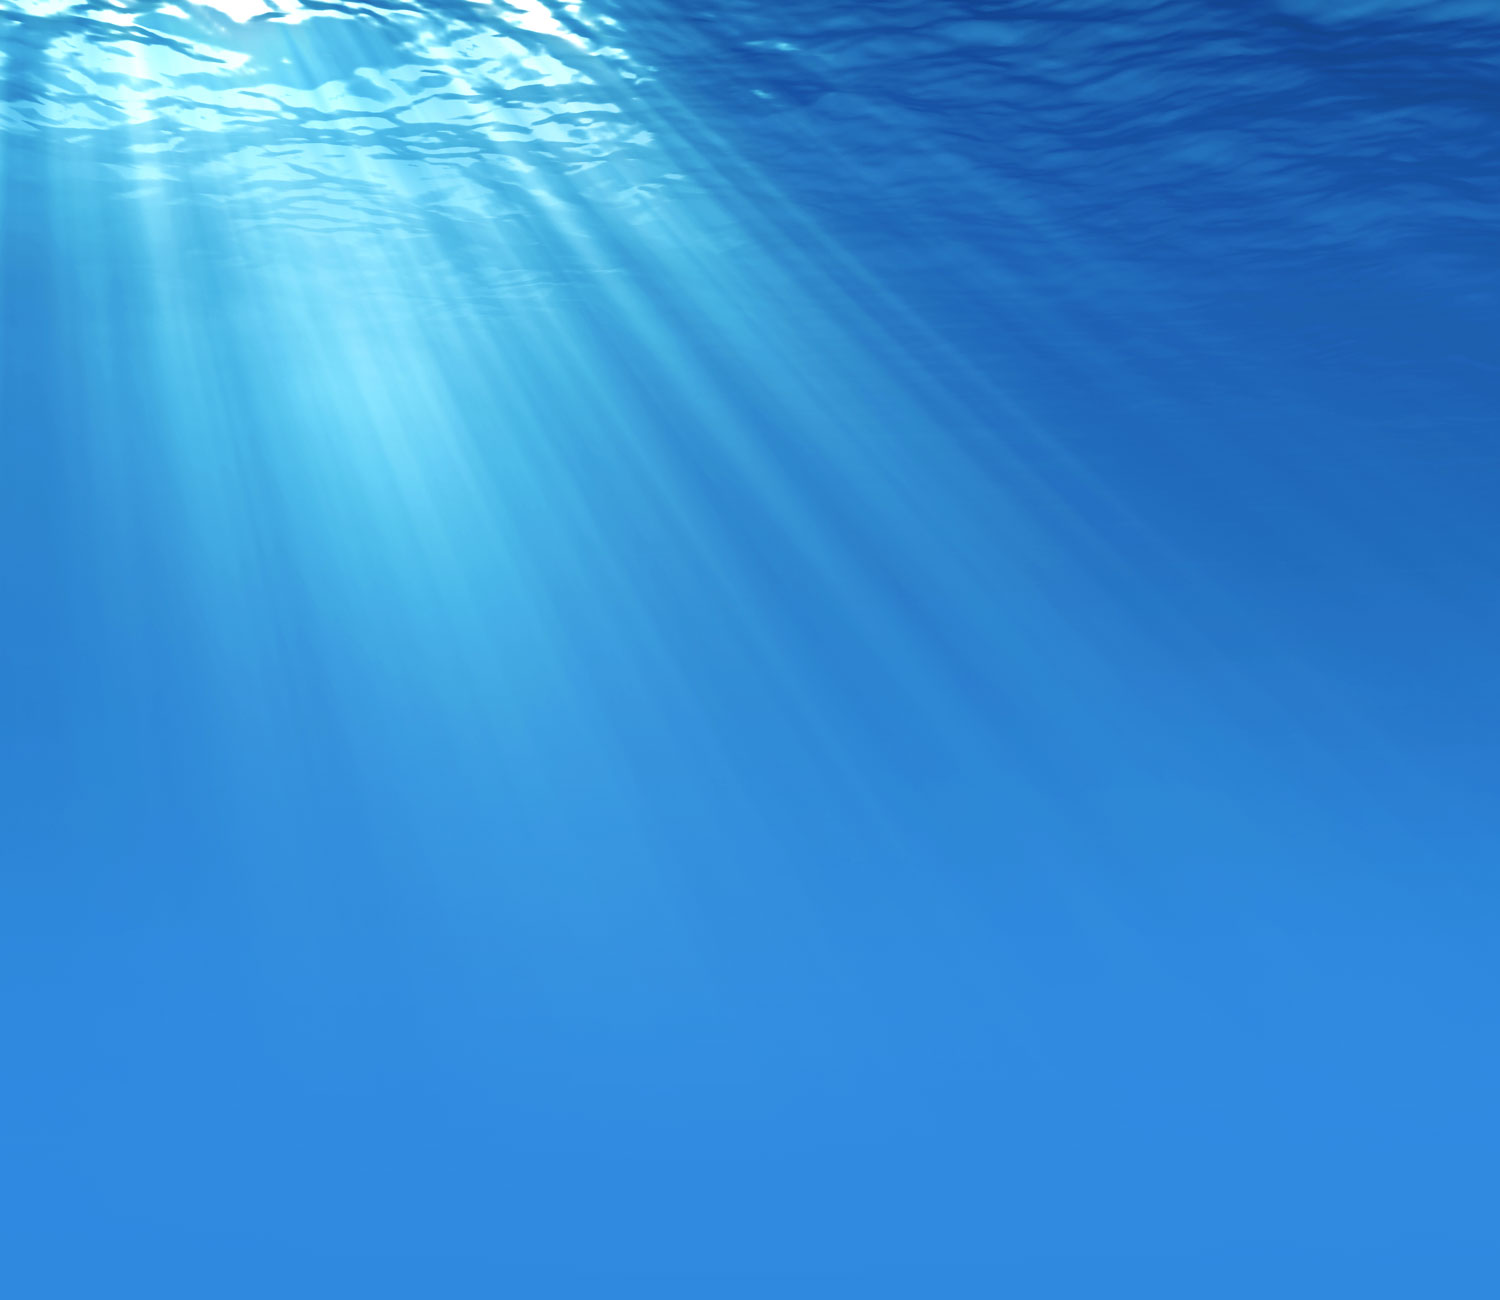 Download wallpaper: under water , light, download photo, under water ...